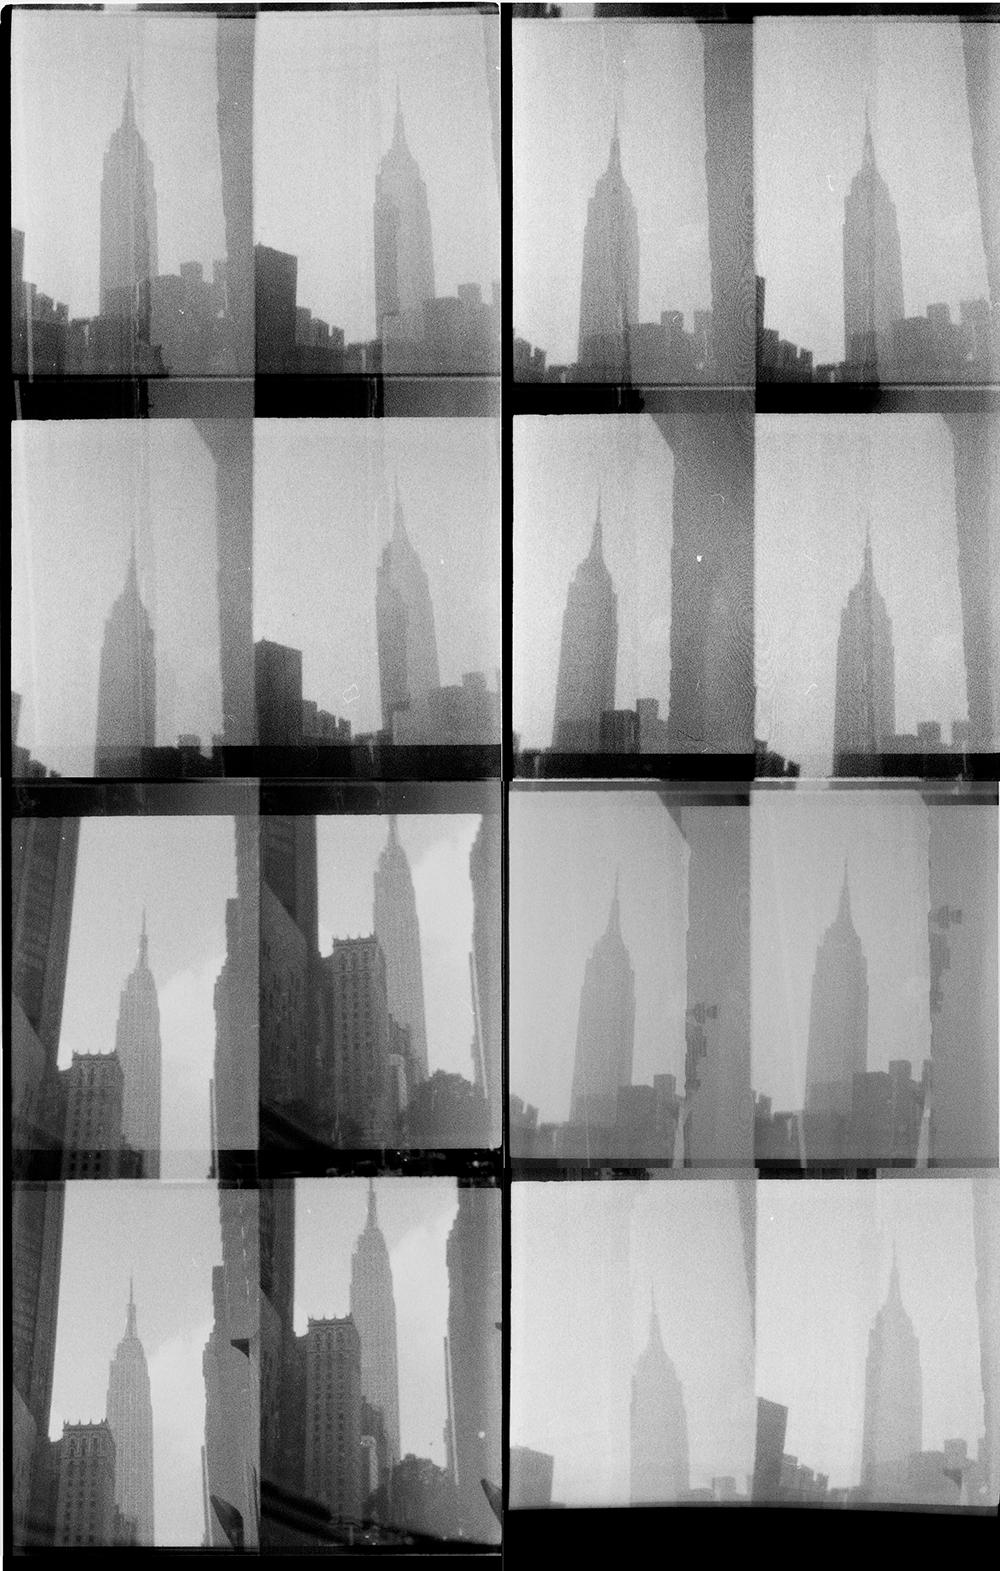 Landscape Photograph Stefanie Schneider - The Empire (Strange Love) - Empire State Building, New York, paysage